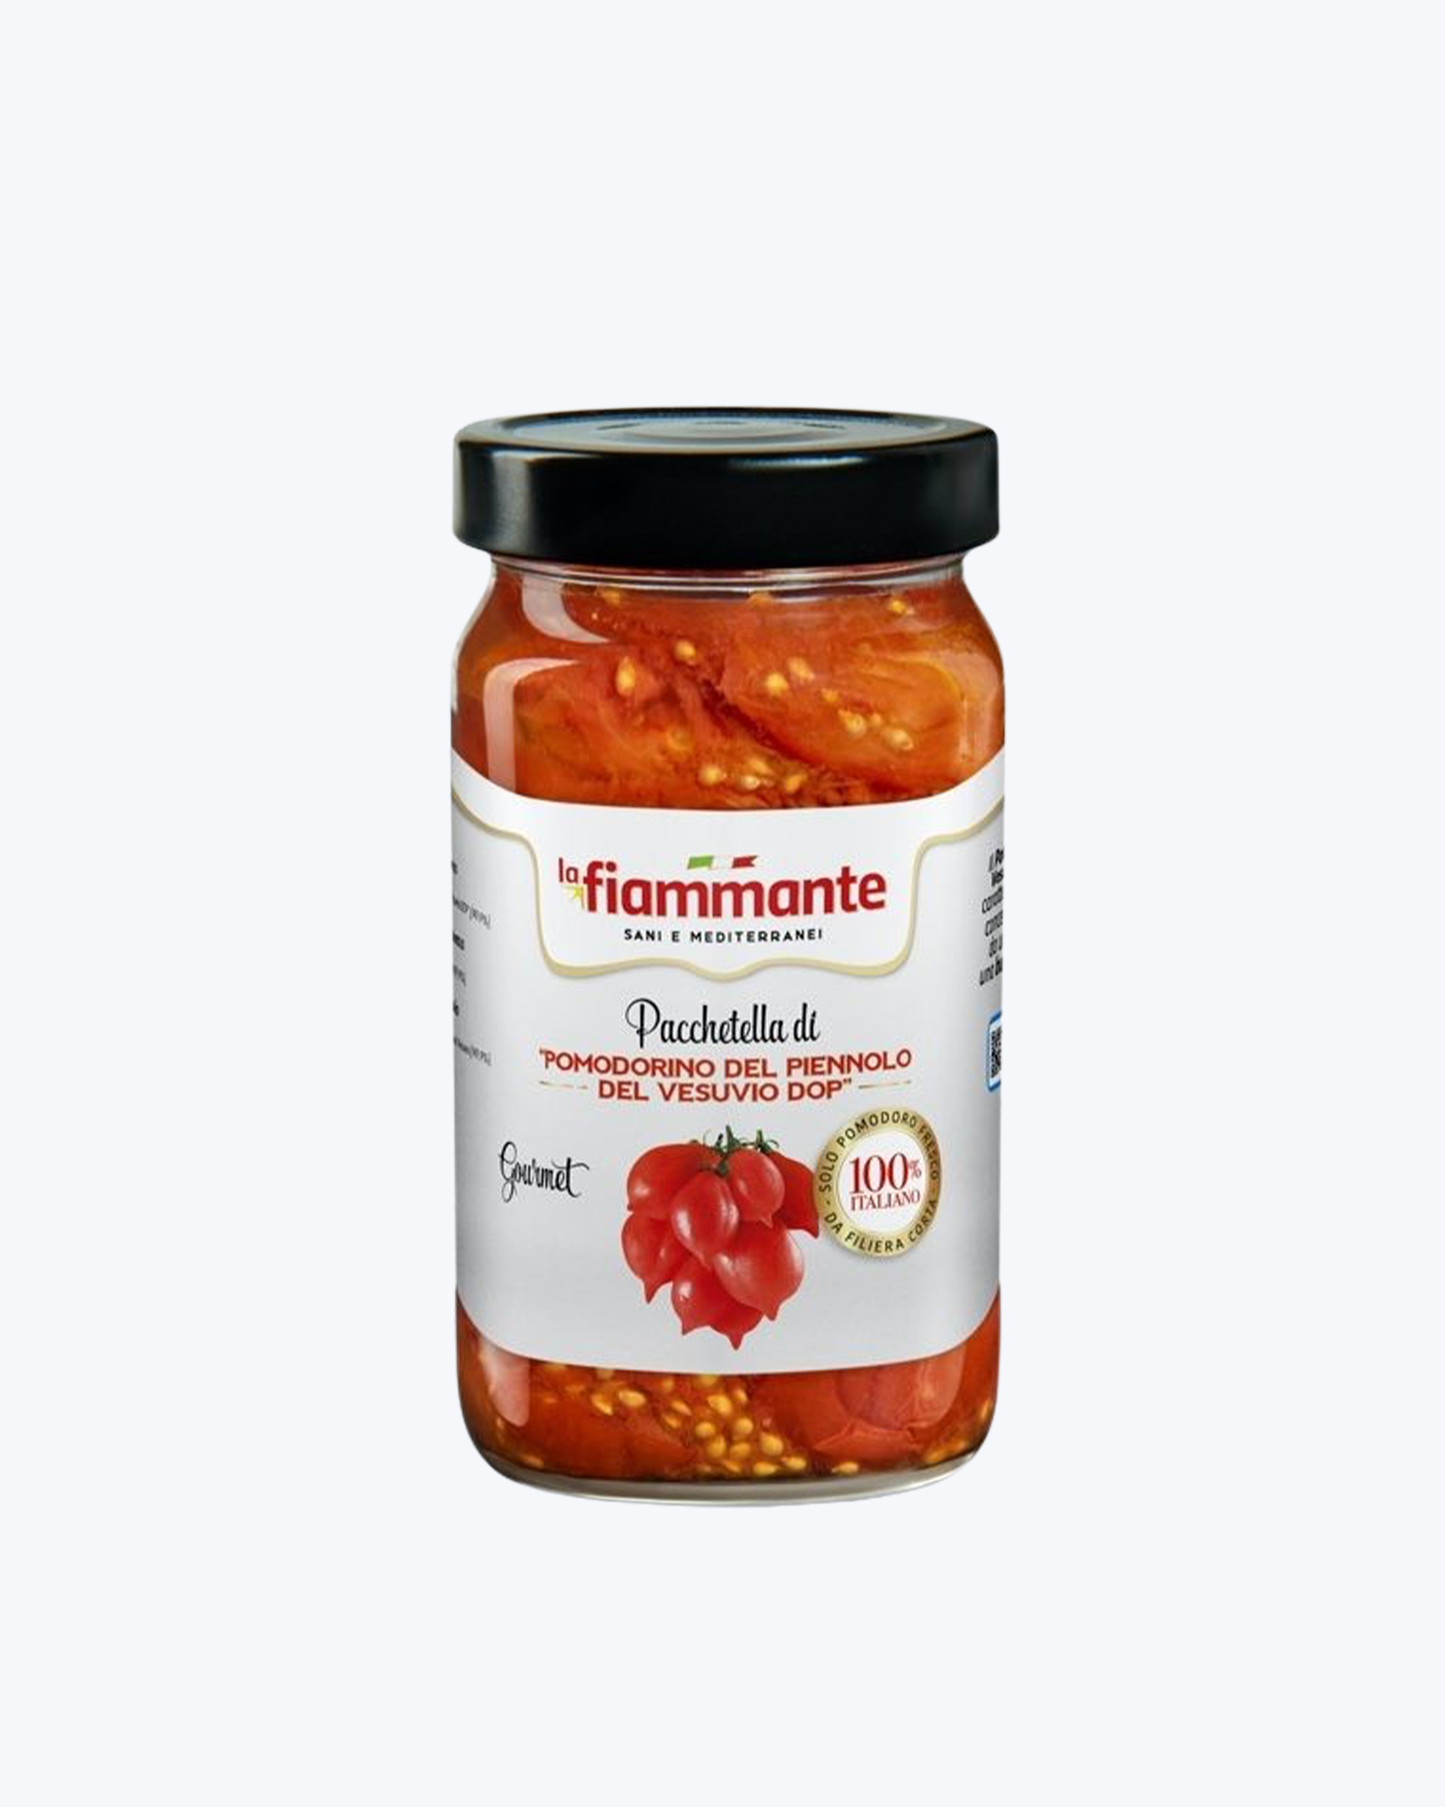 Raudonieji pomidoriukai Piennolo del Vesuvio DOP 450g